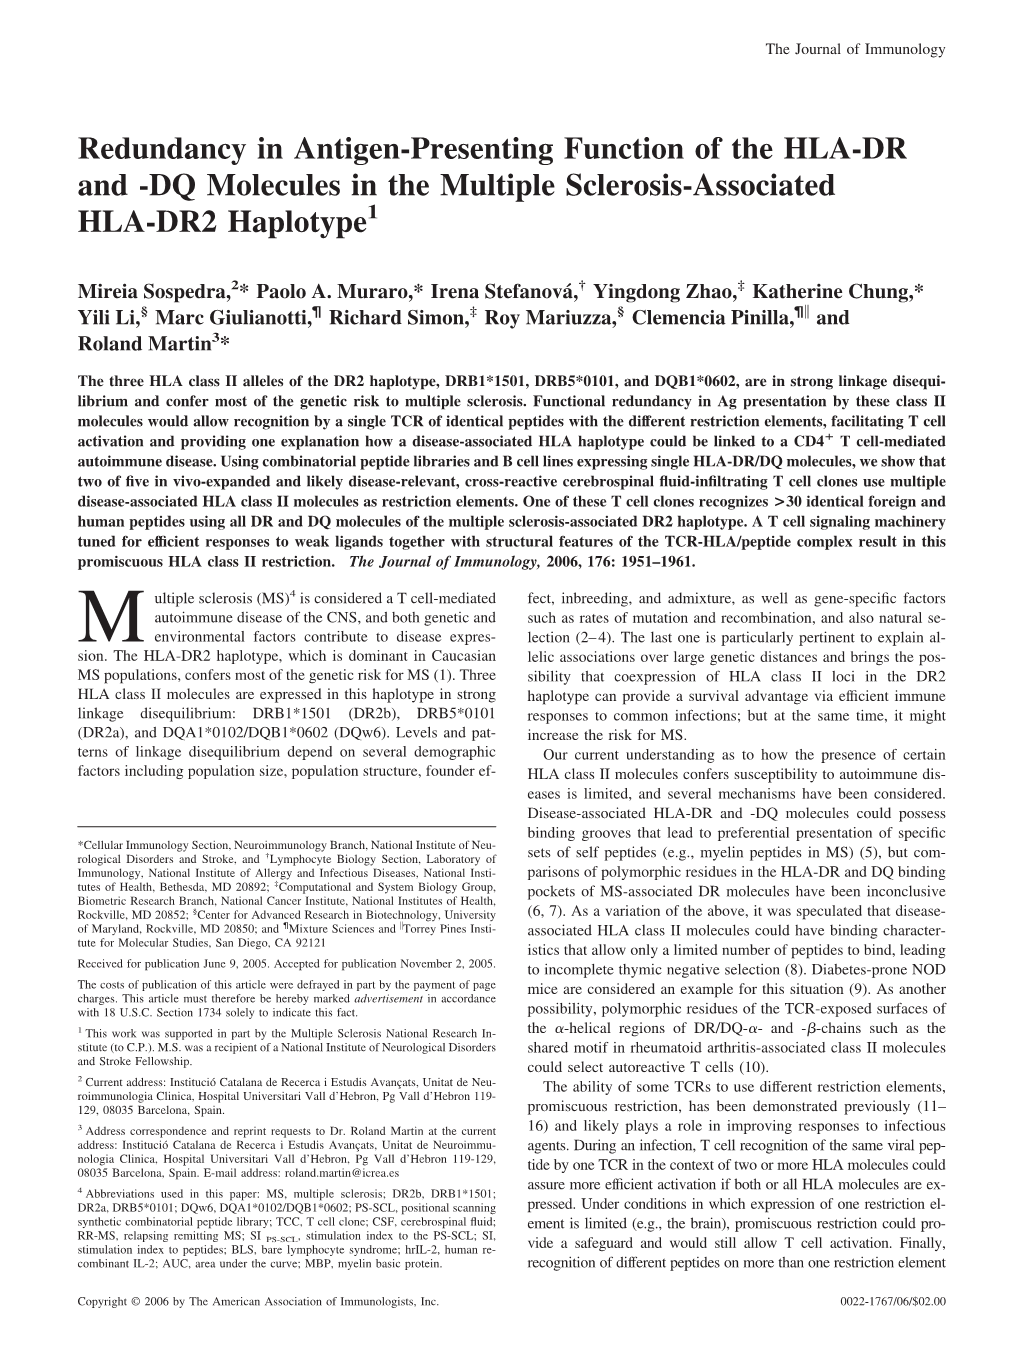 Haplotype Multiple Sclerosis-Associated HLA-DR2 Of